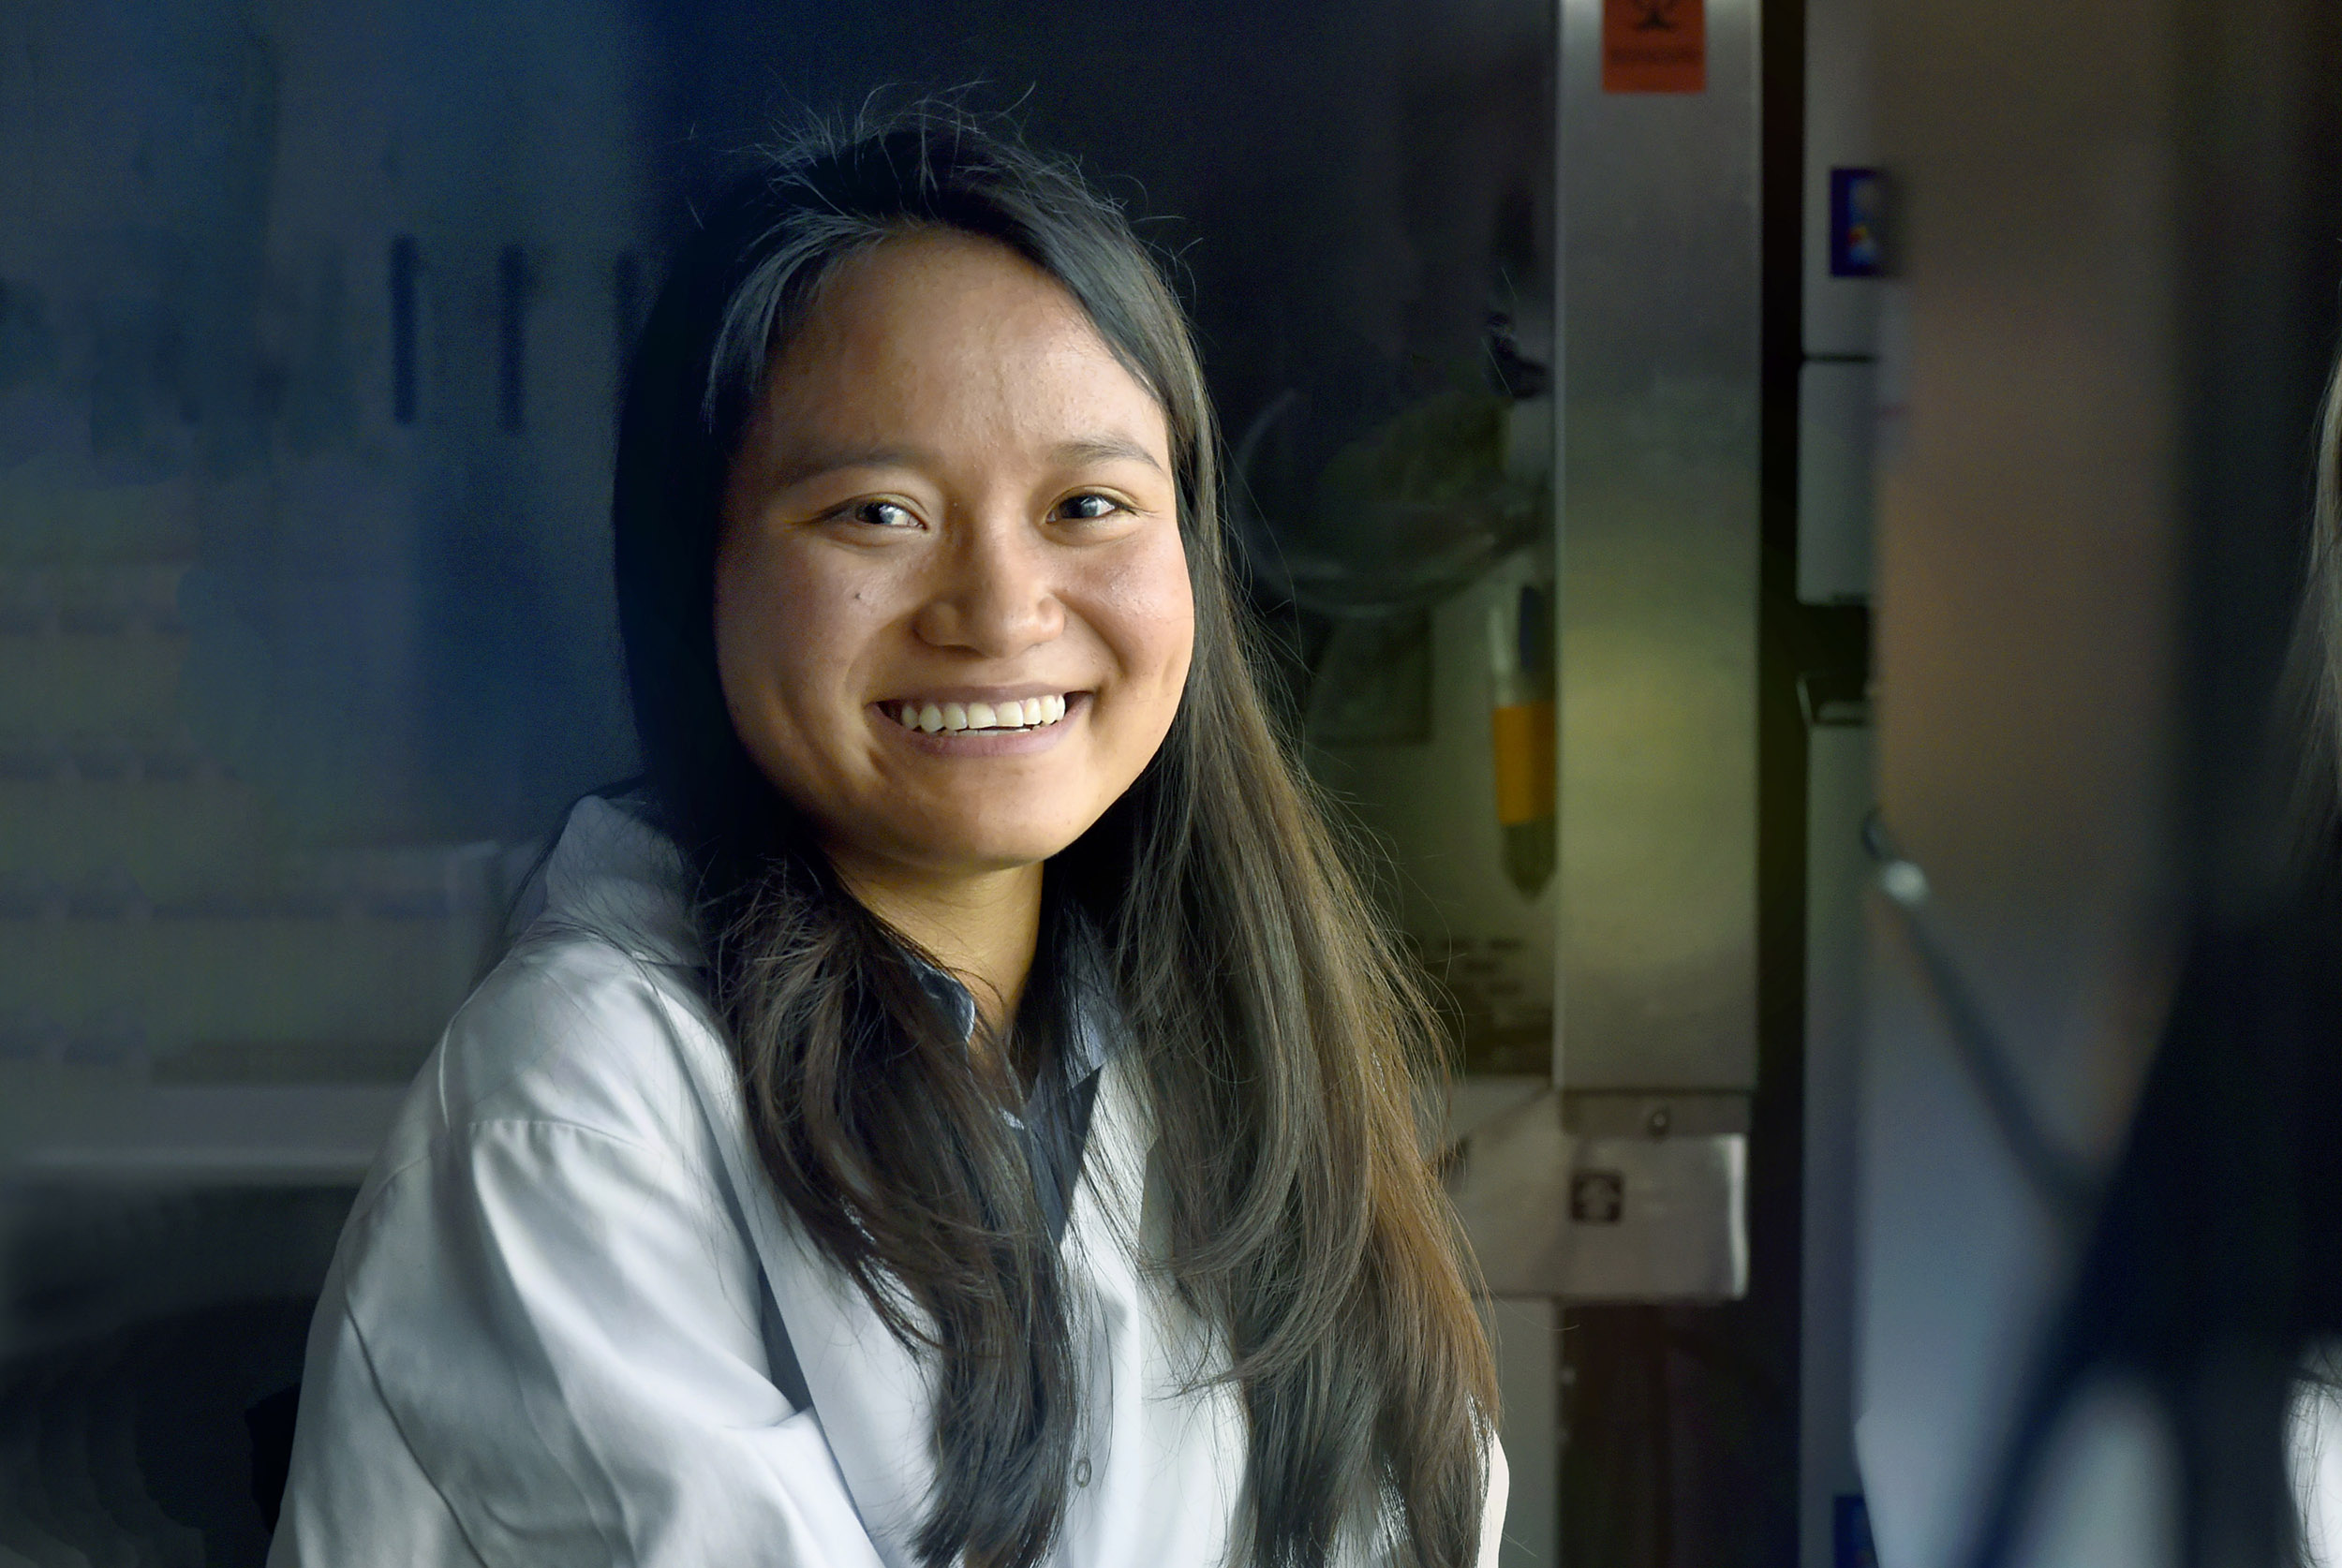 Thidar Aye in her lab coat smiles at the camera.